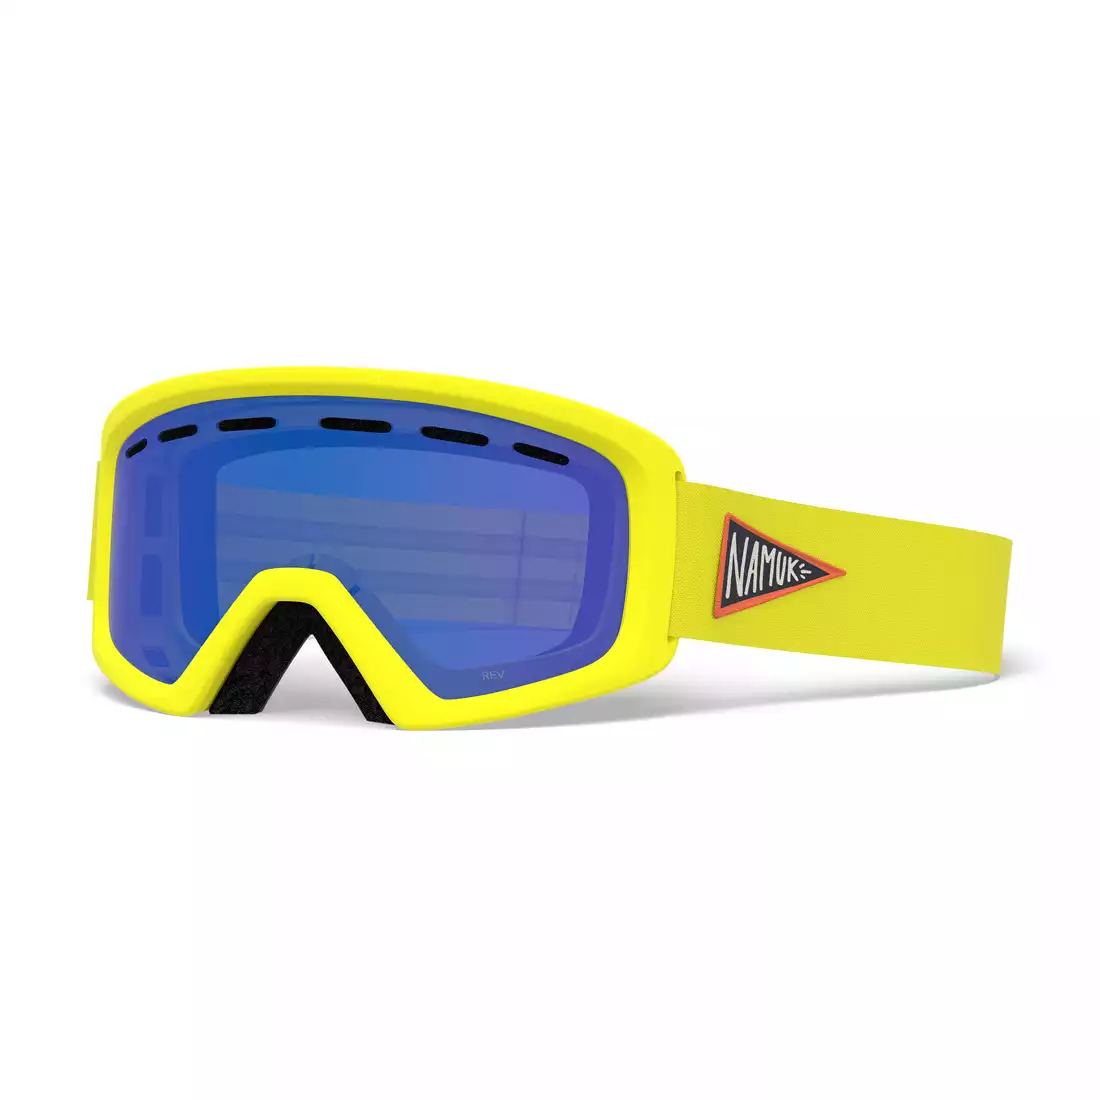 Juniorskie gogle narciarskie / snowboardowe REV NAMUK YELLOW GR-7105433